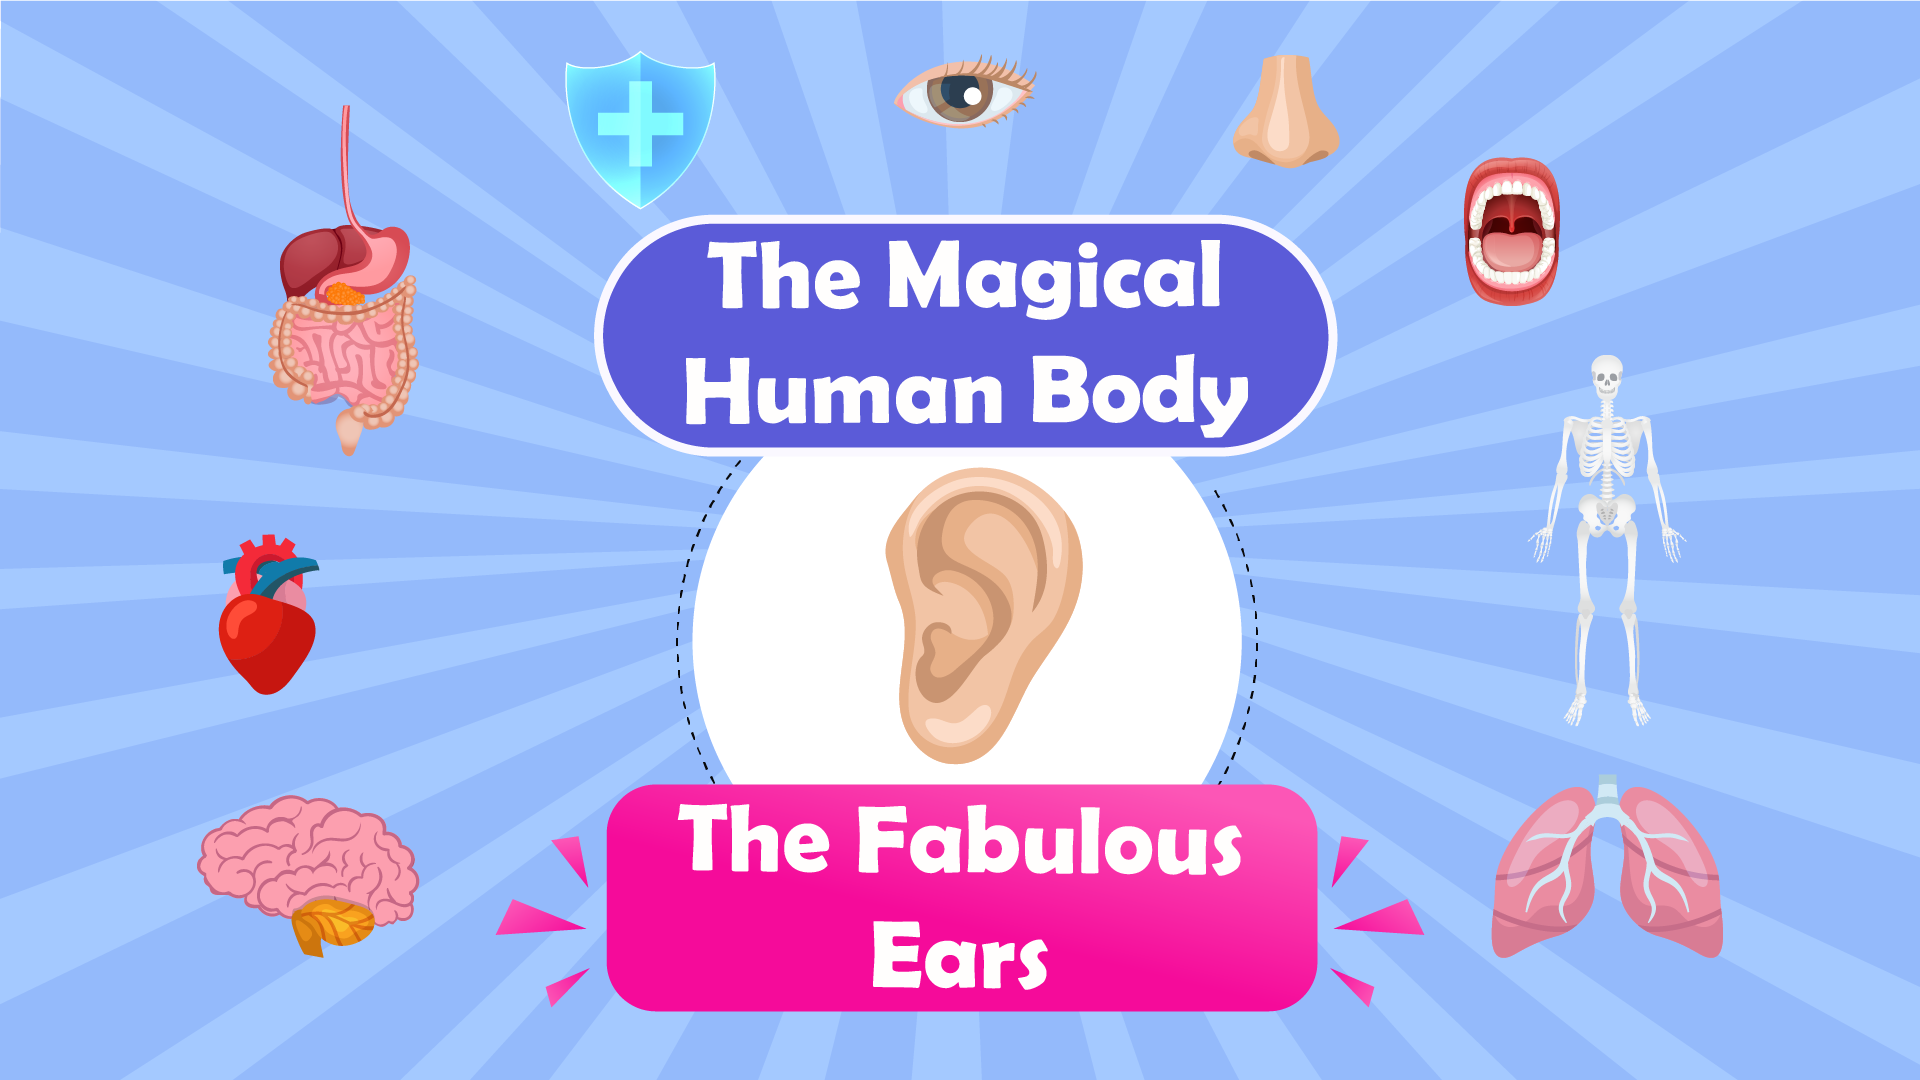 The Fabulous Ears